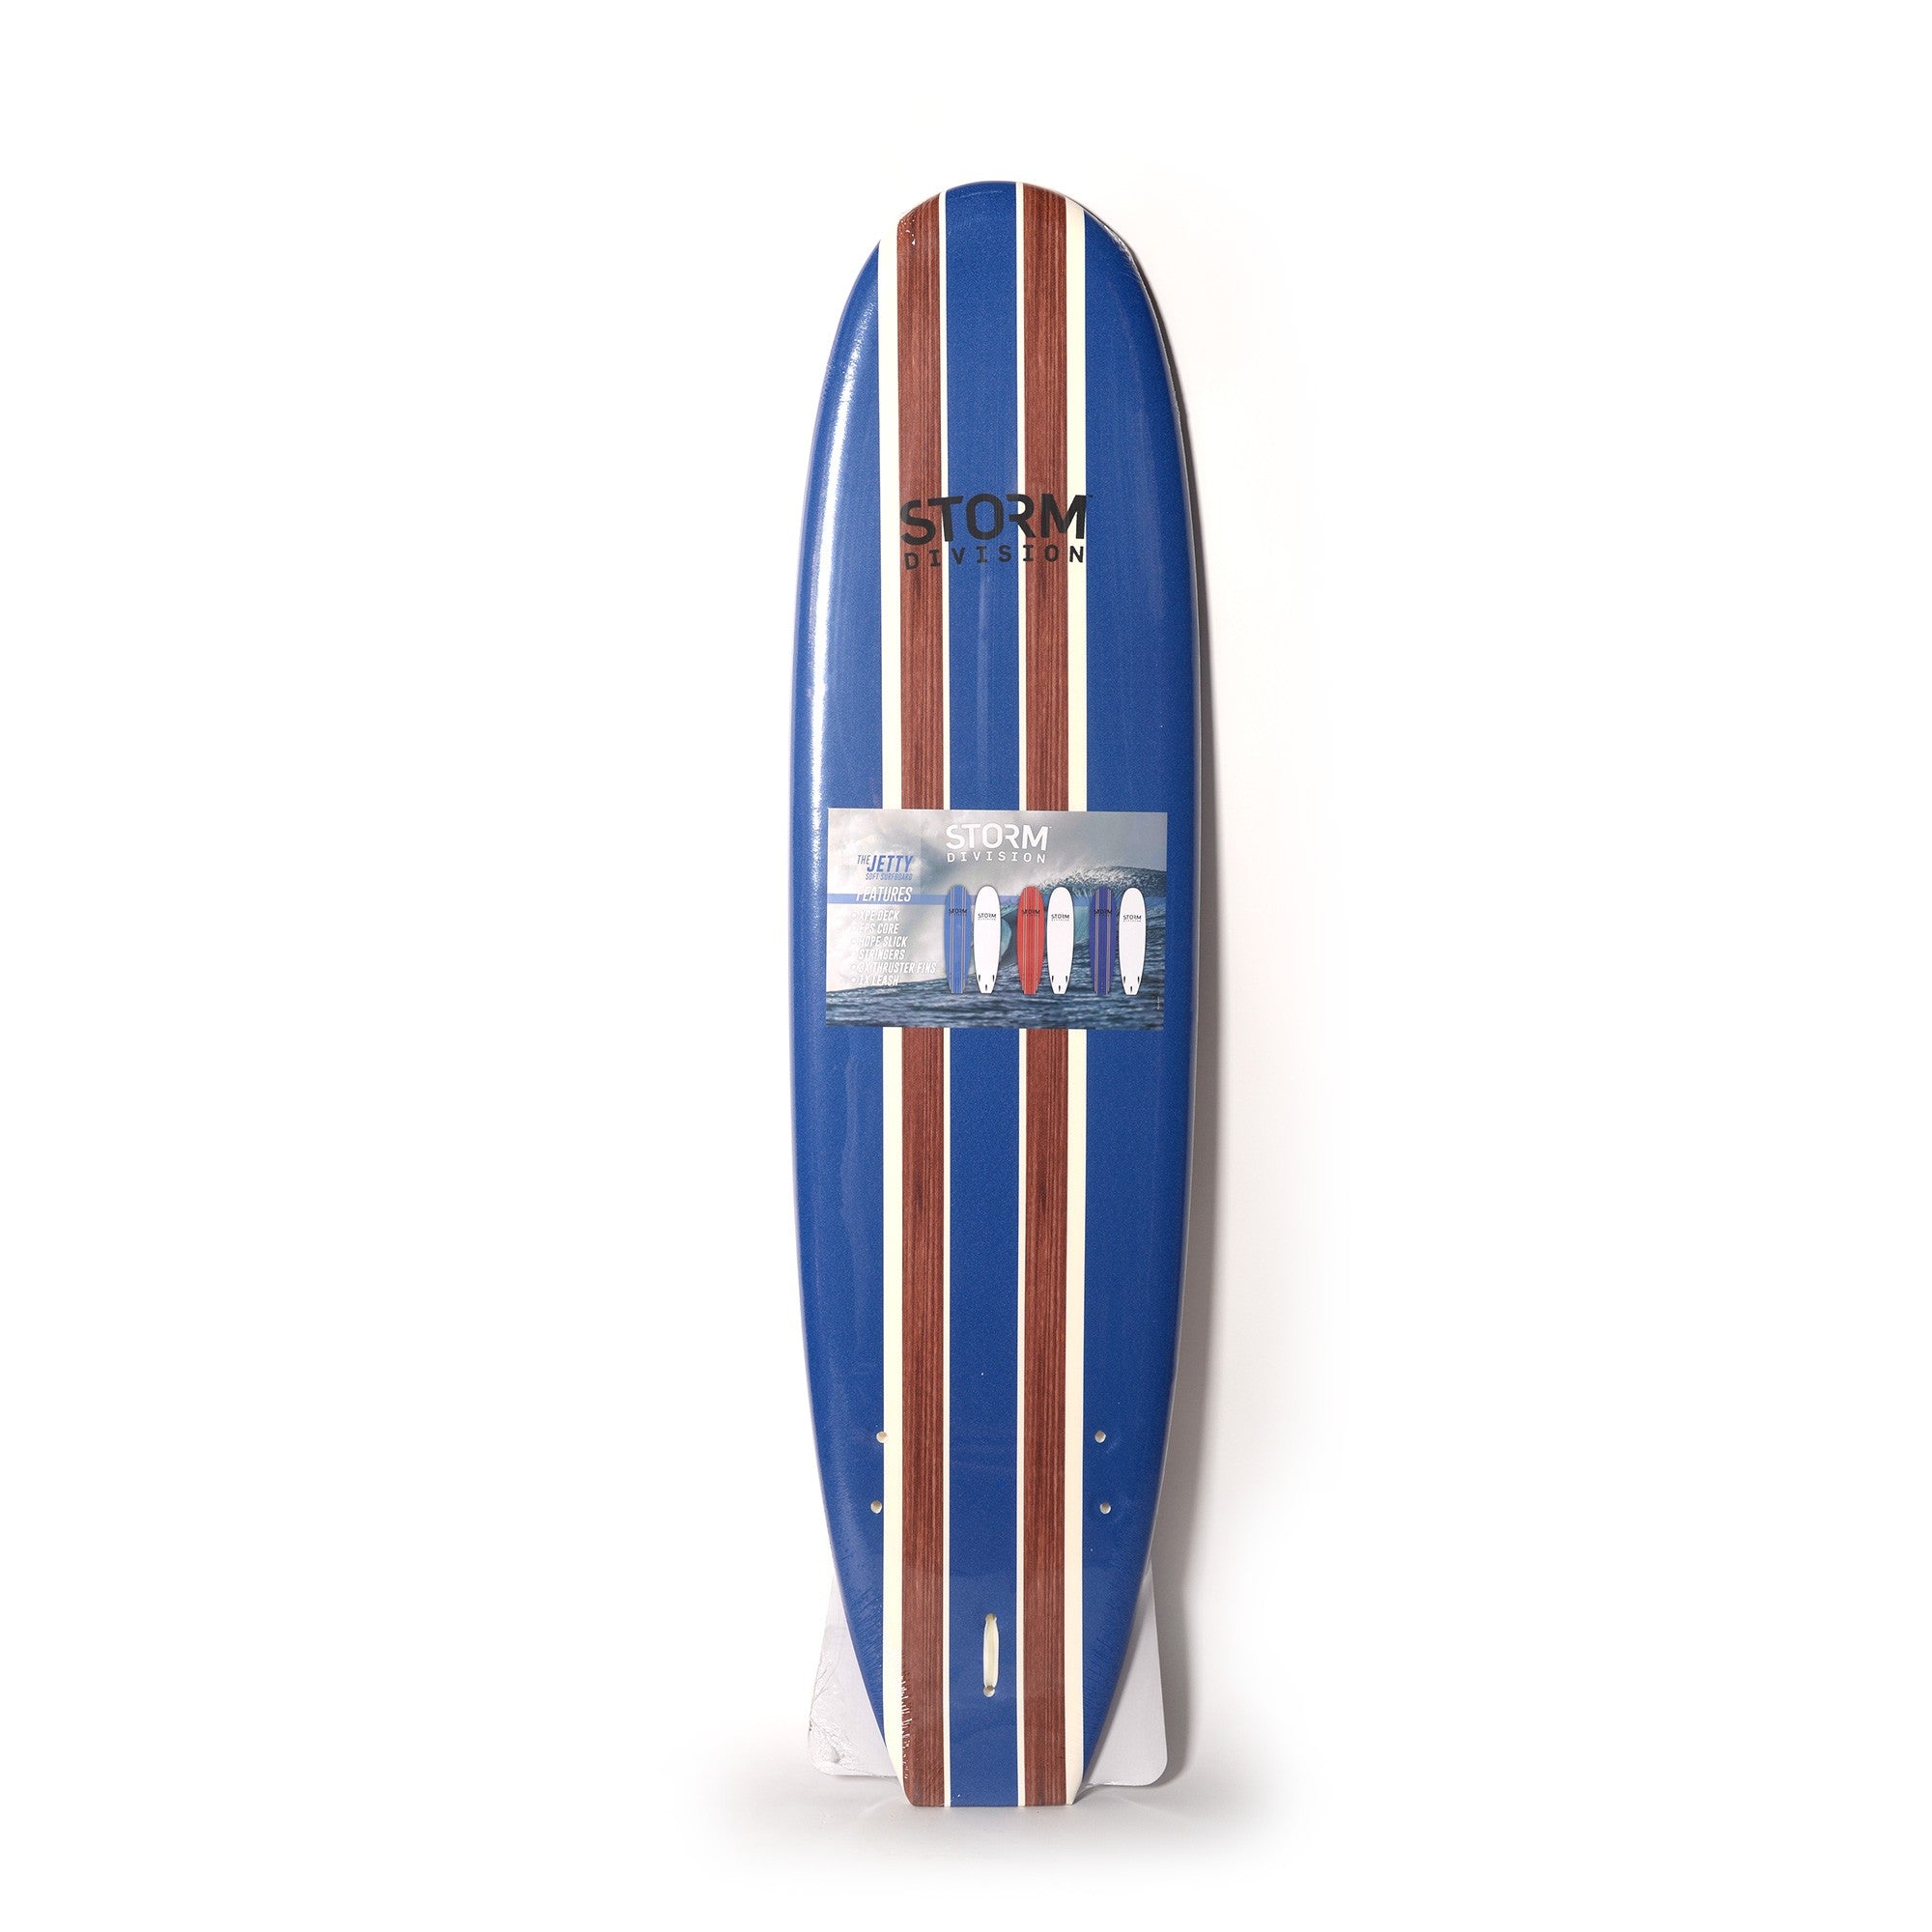 STORM DIVISION - Jetty Softboard - Foam Surfboard - 8'0 - Dark blue